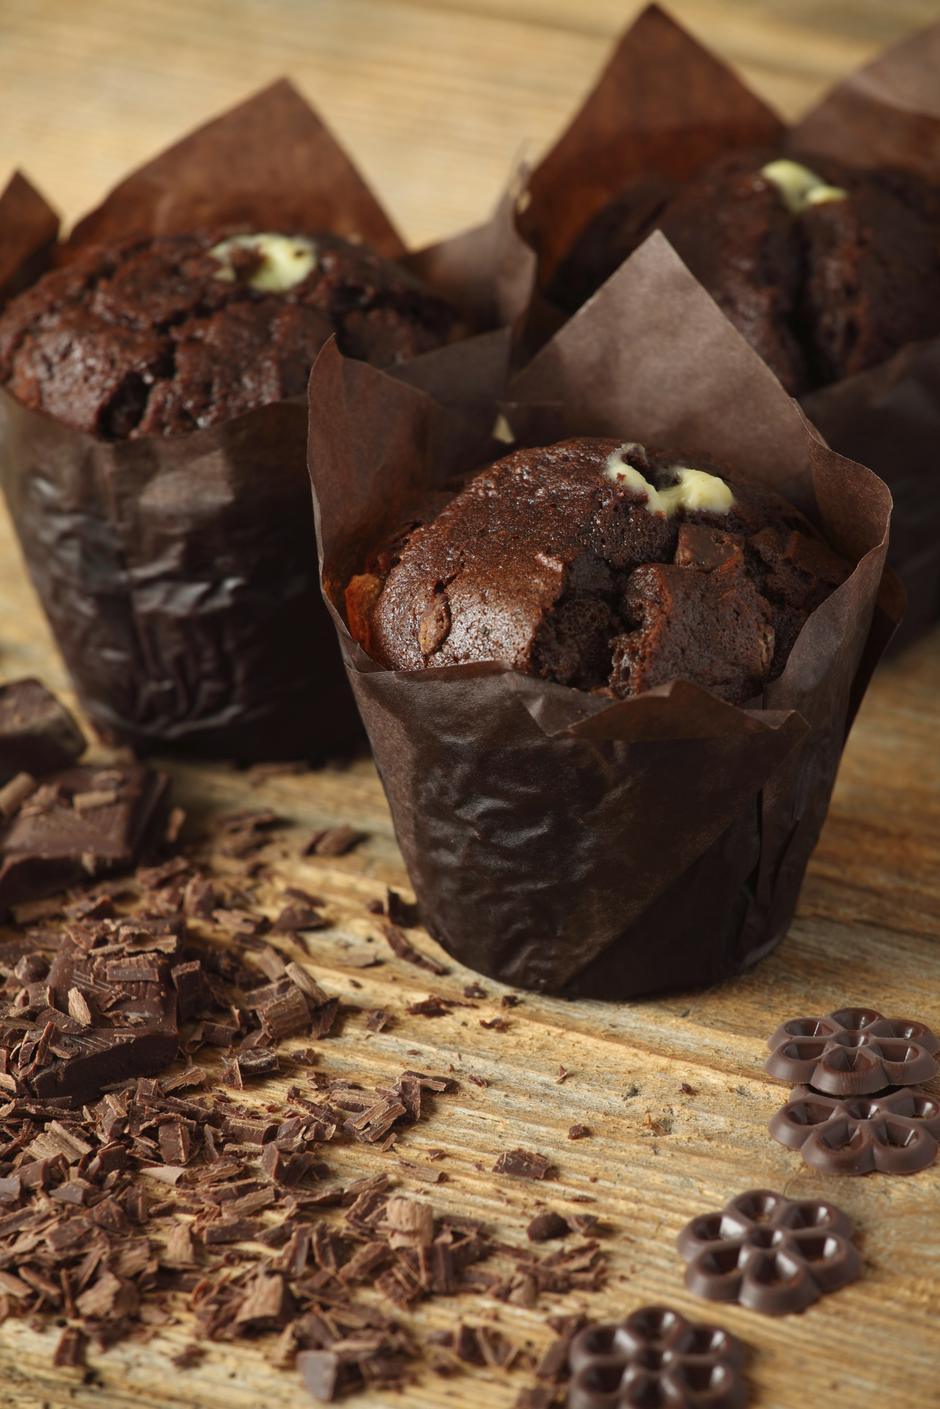 muffini s rogačem i čokoladom | Author: Thinkstock